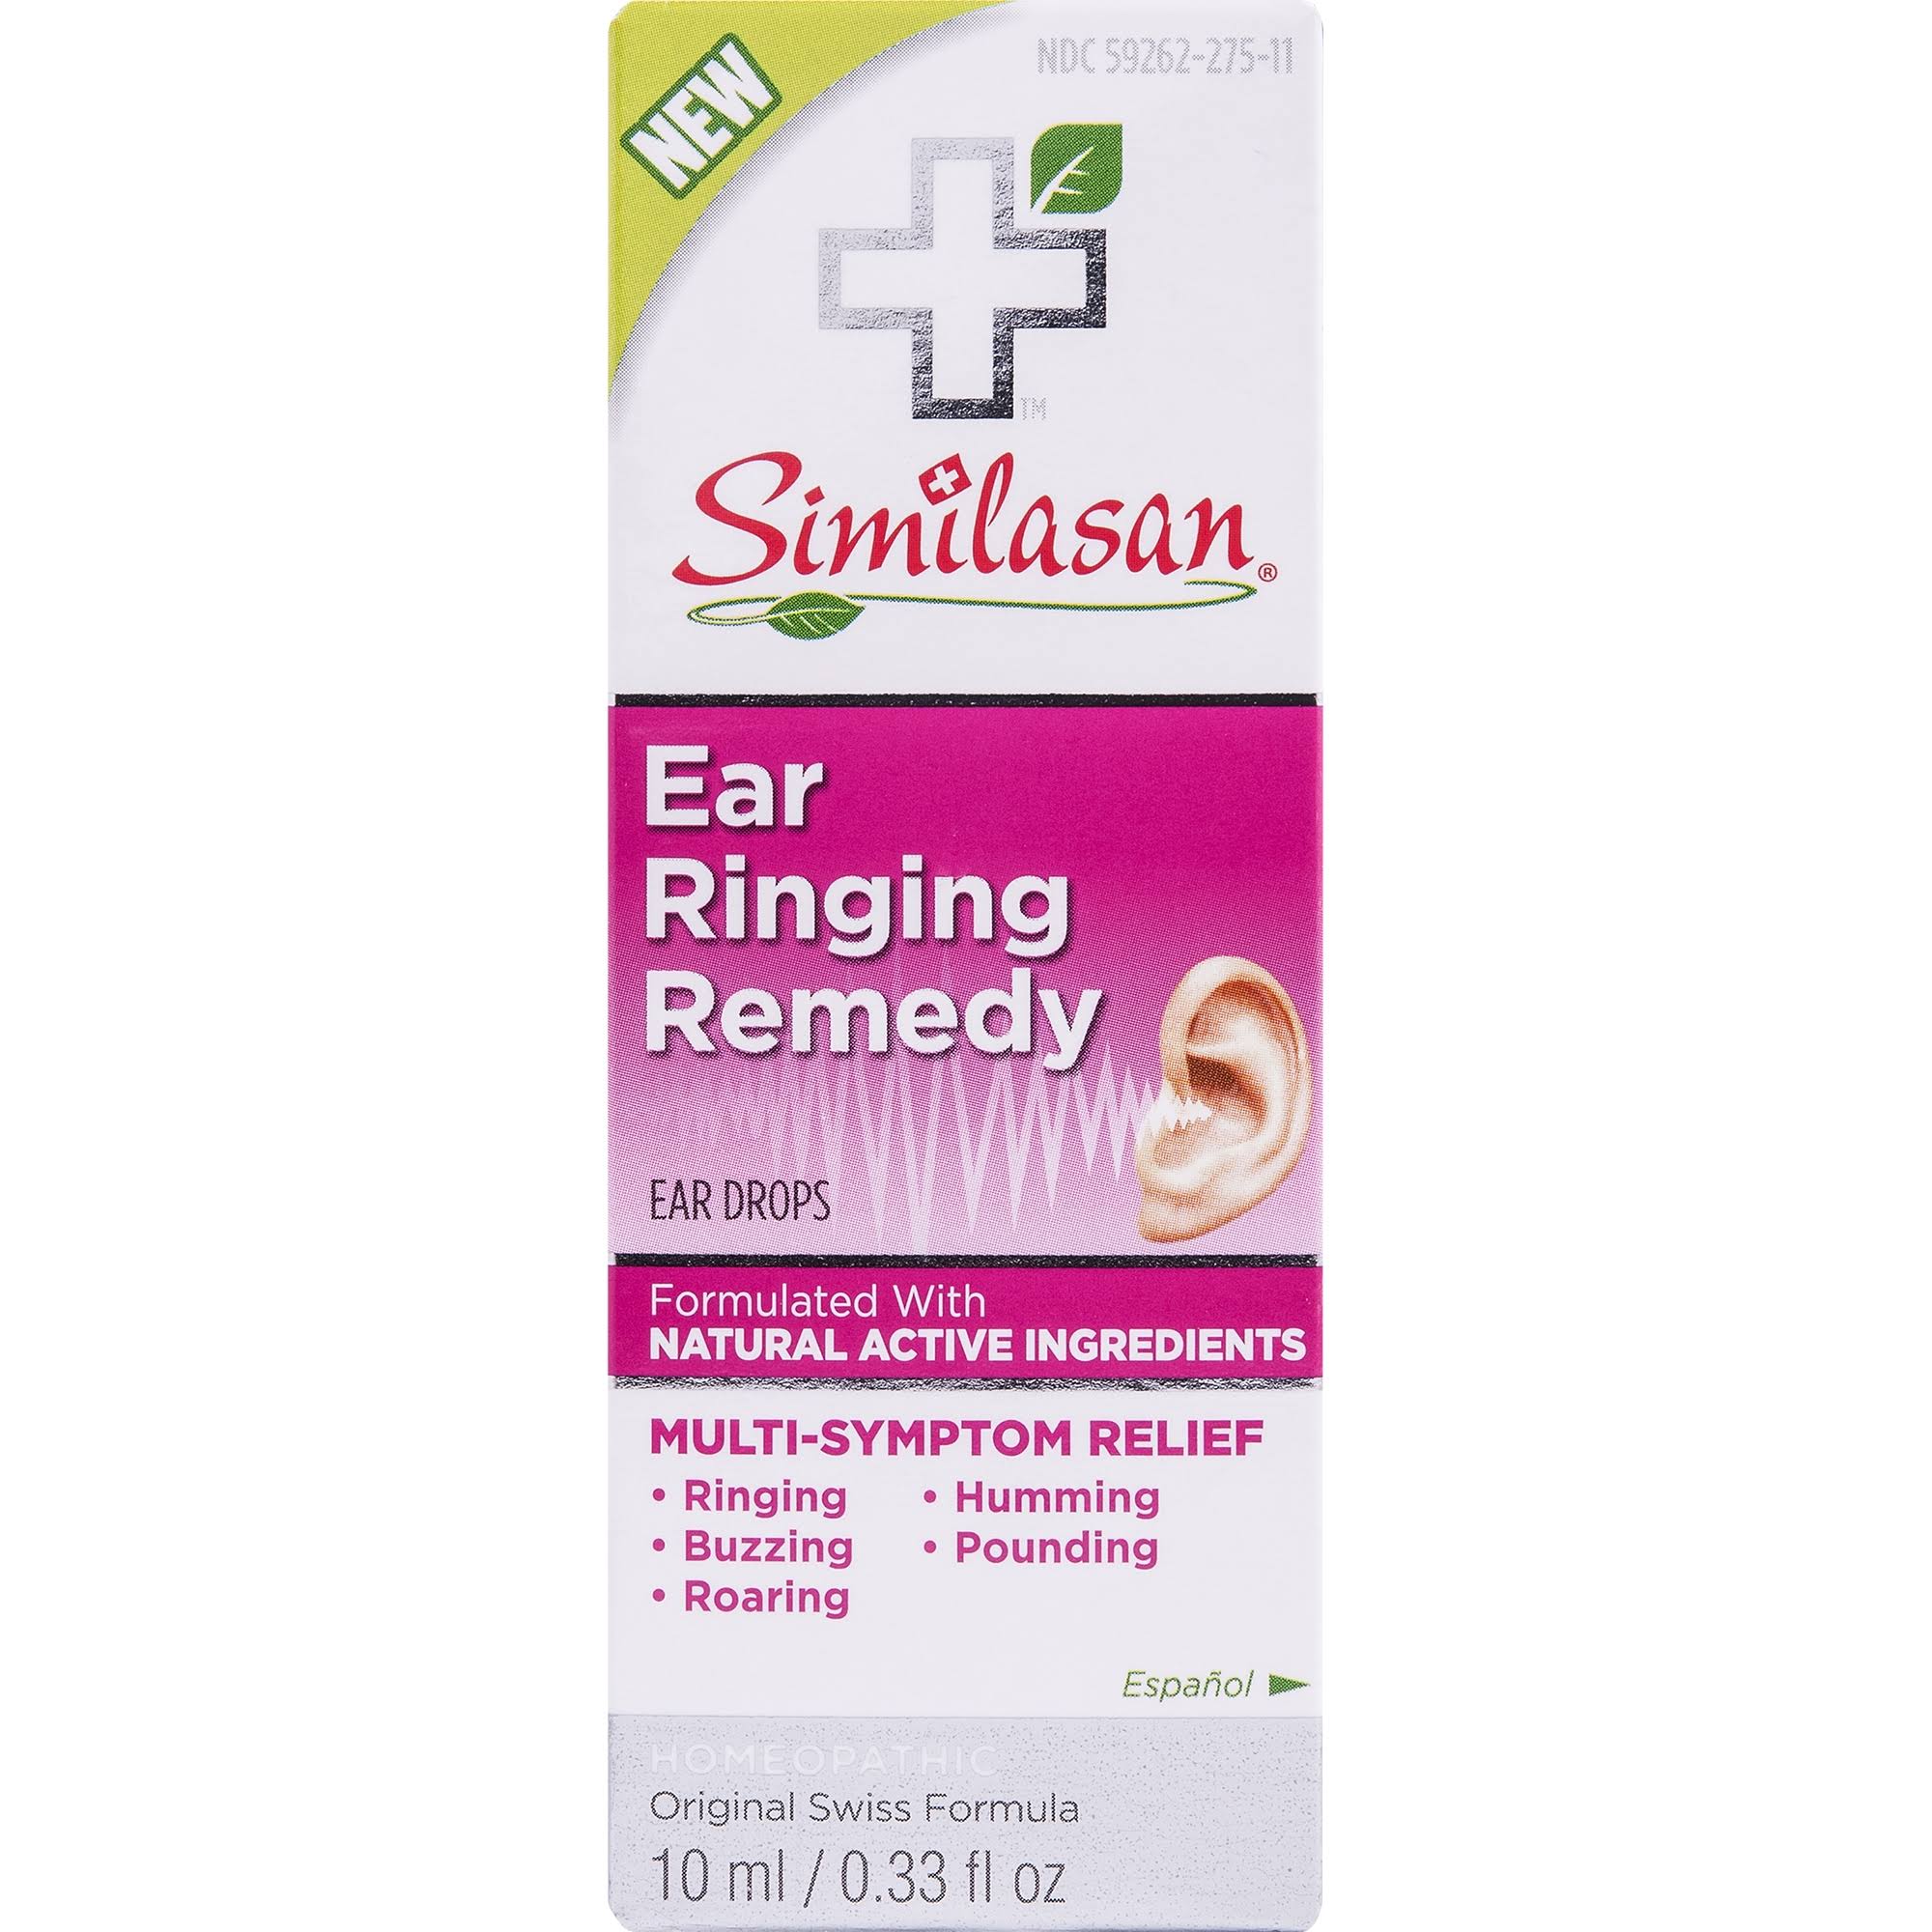 Similasan Ear Ringing Remedy Ear Drops - 10ml